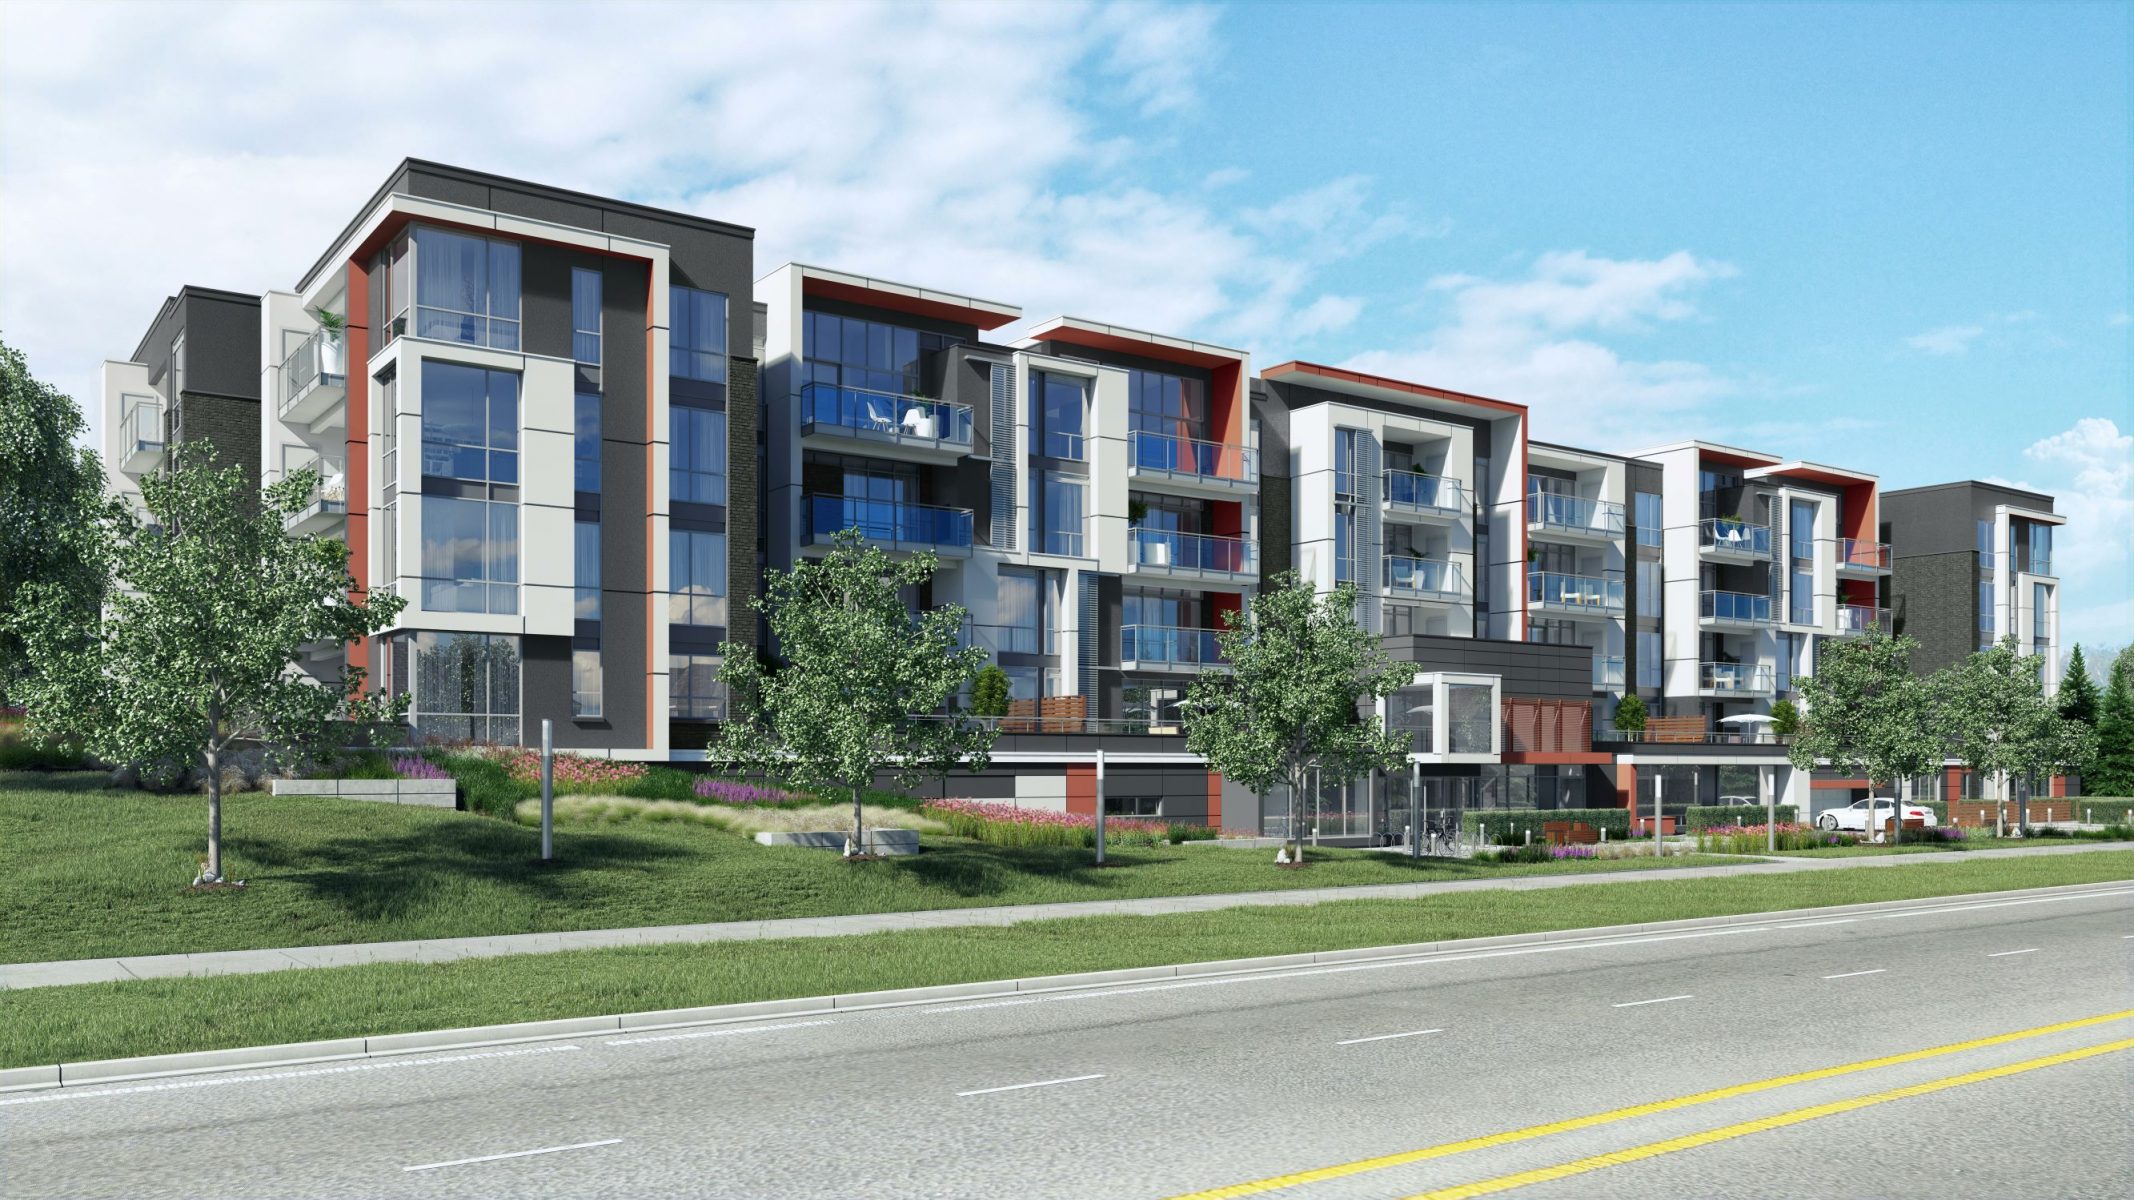 Korsiak Urban Planning - Oakville Portfolio - Dundas Street West, Greenfield Development - Oakville, Ontario